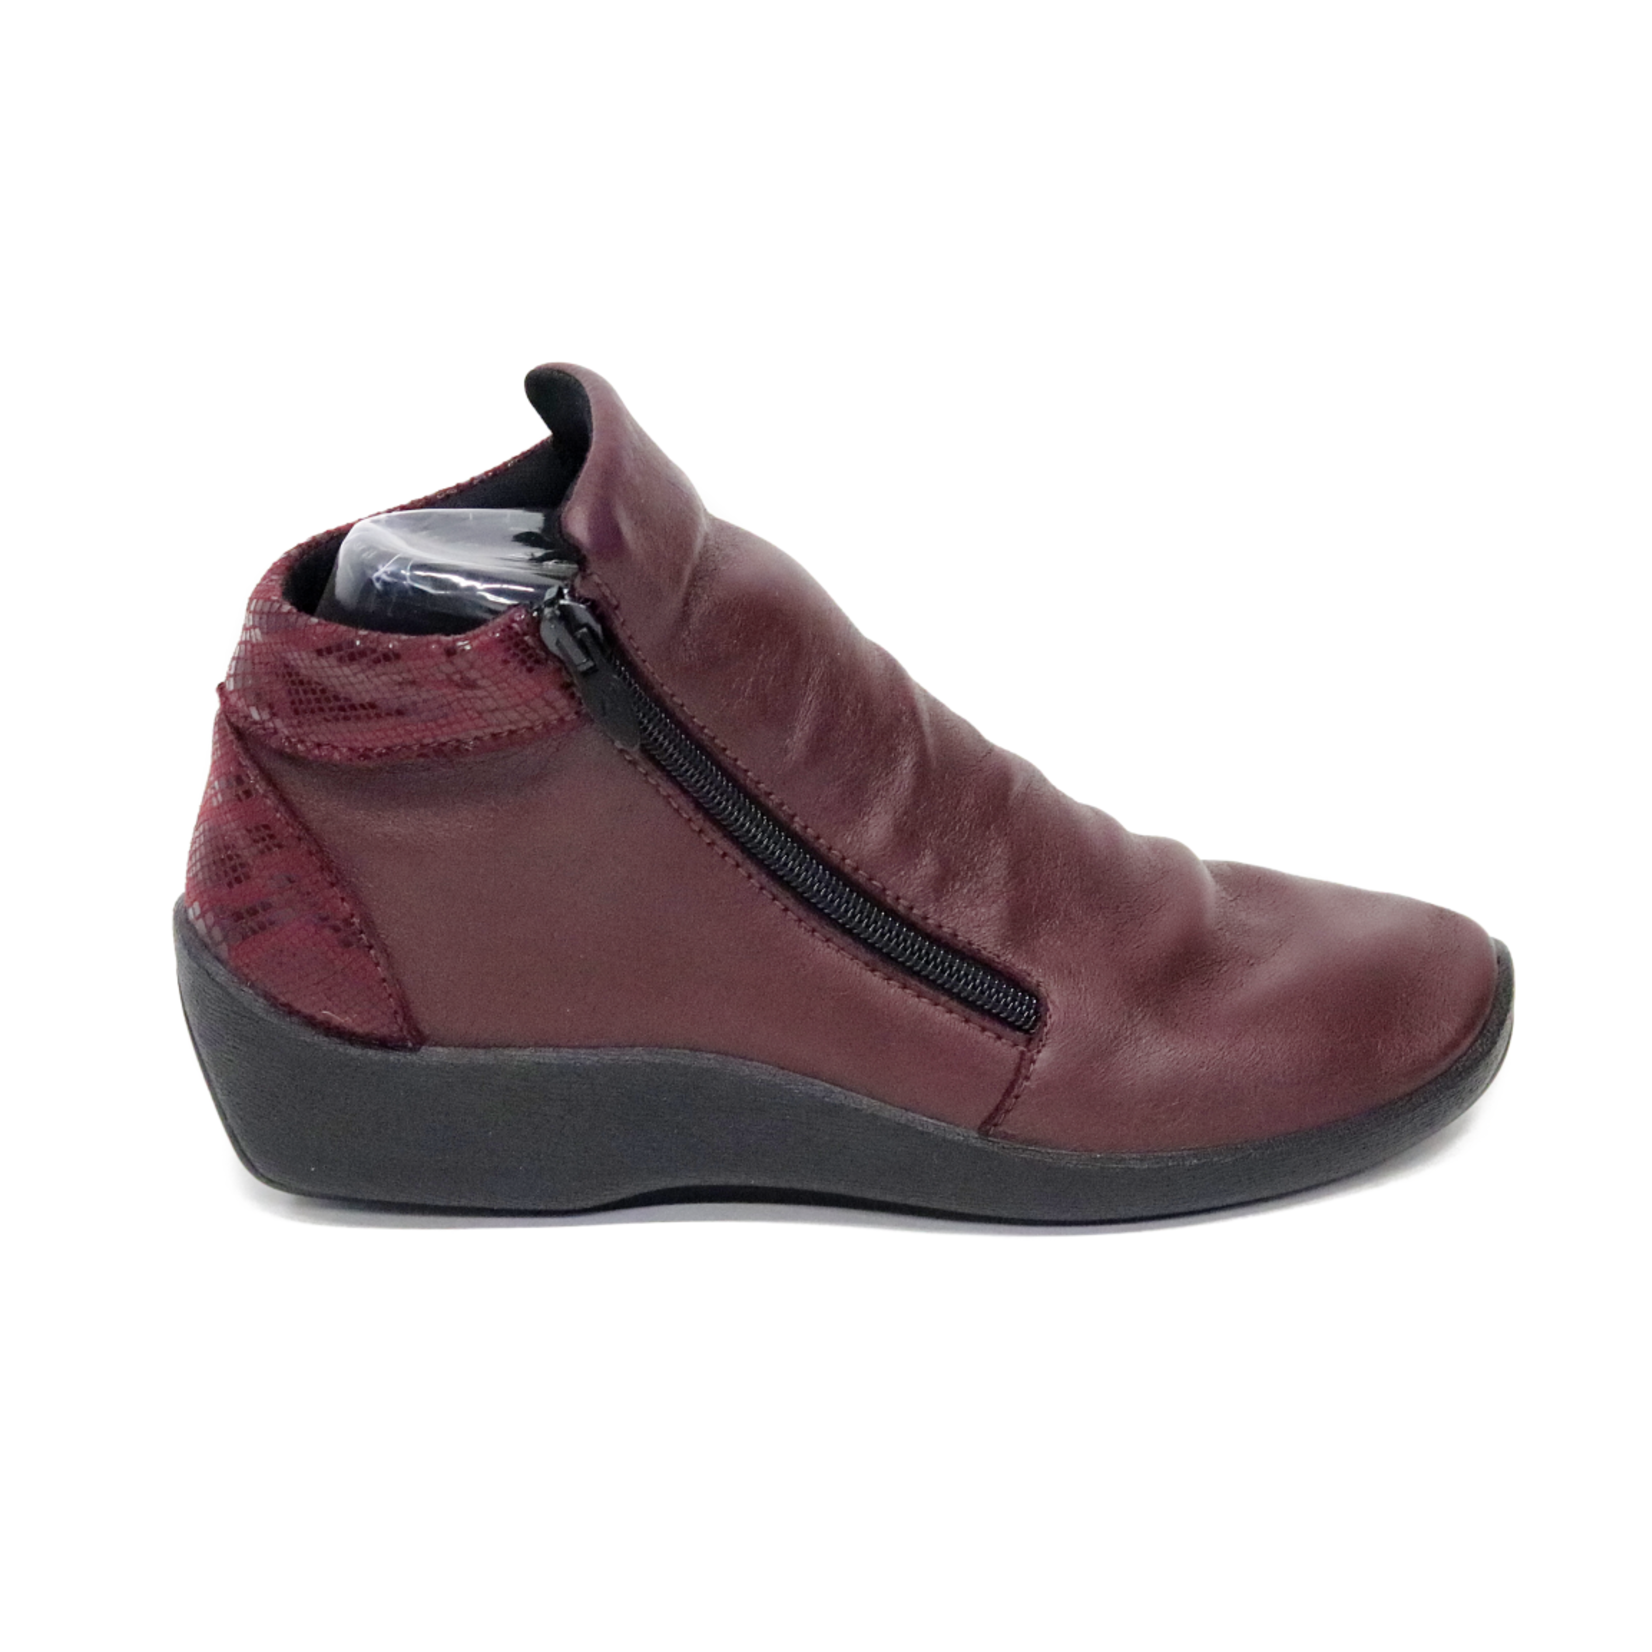 ARC Lytech 4654 LAFAYETTE - Shoes of Europe